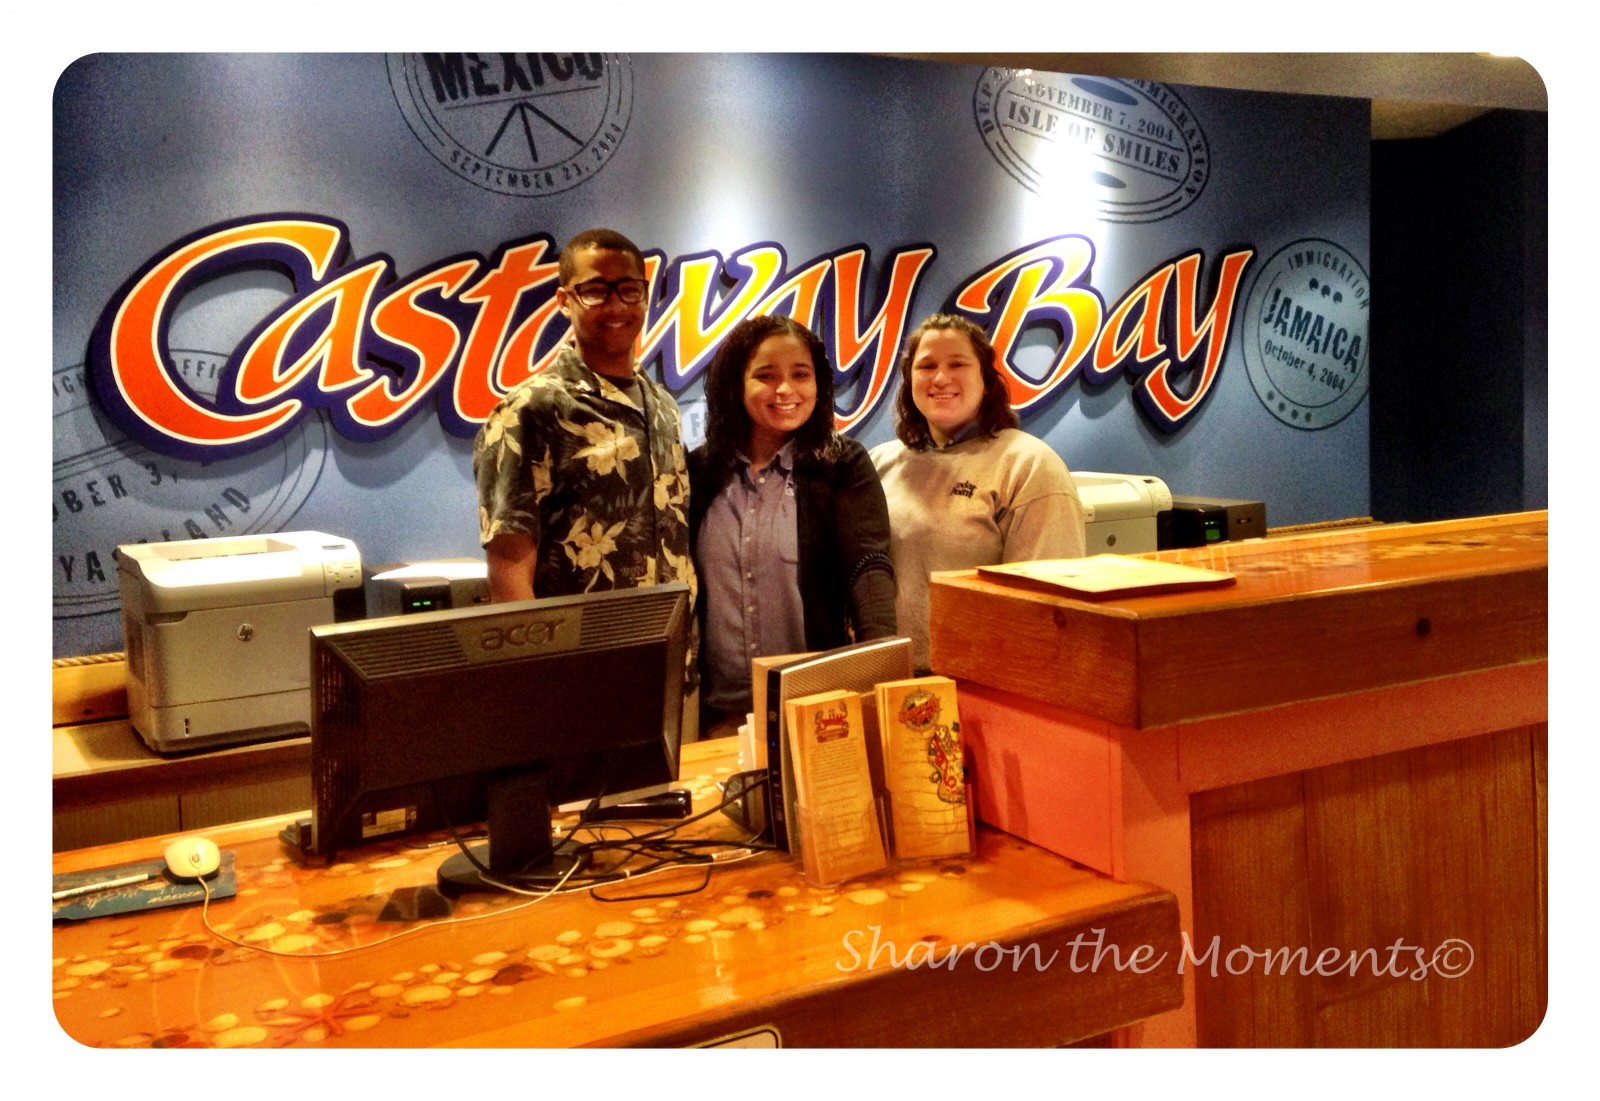 Our Visit to Castaway Bay Resort Cedar Point Sandusky Ohio|Sharon the Moments Blog